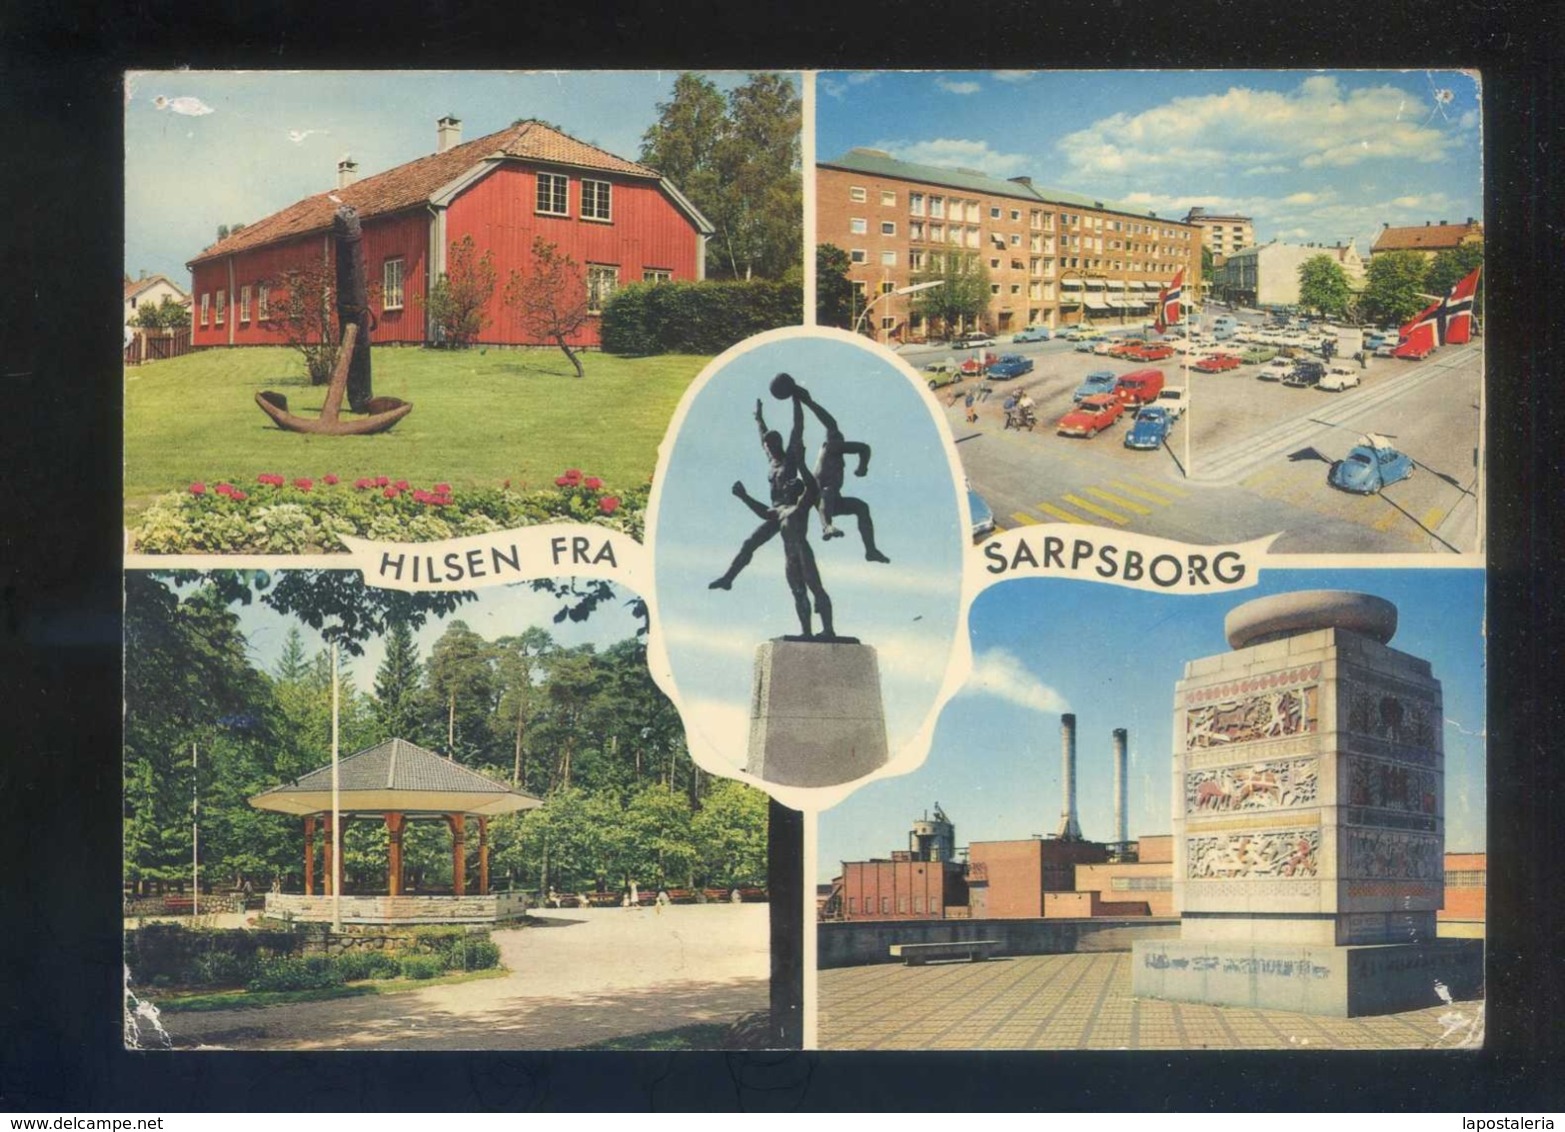 Sarpsborg. *Hilsen Fra Sarpsborg* Circulada Sarpsborg 1971. - Noruega